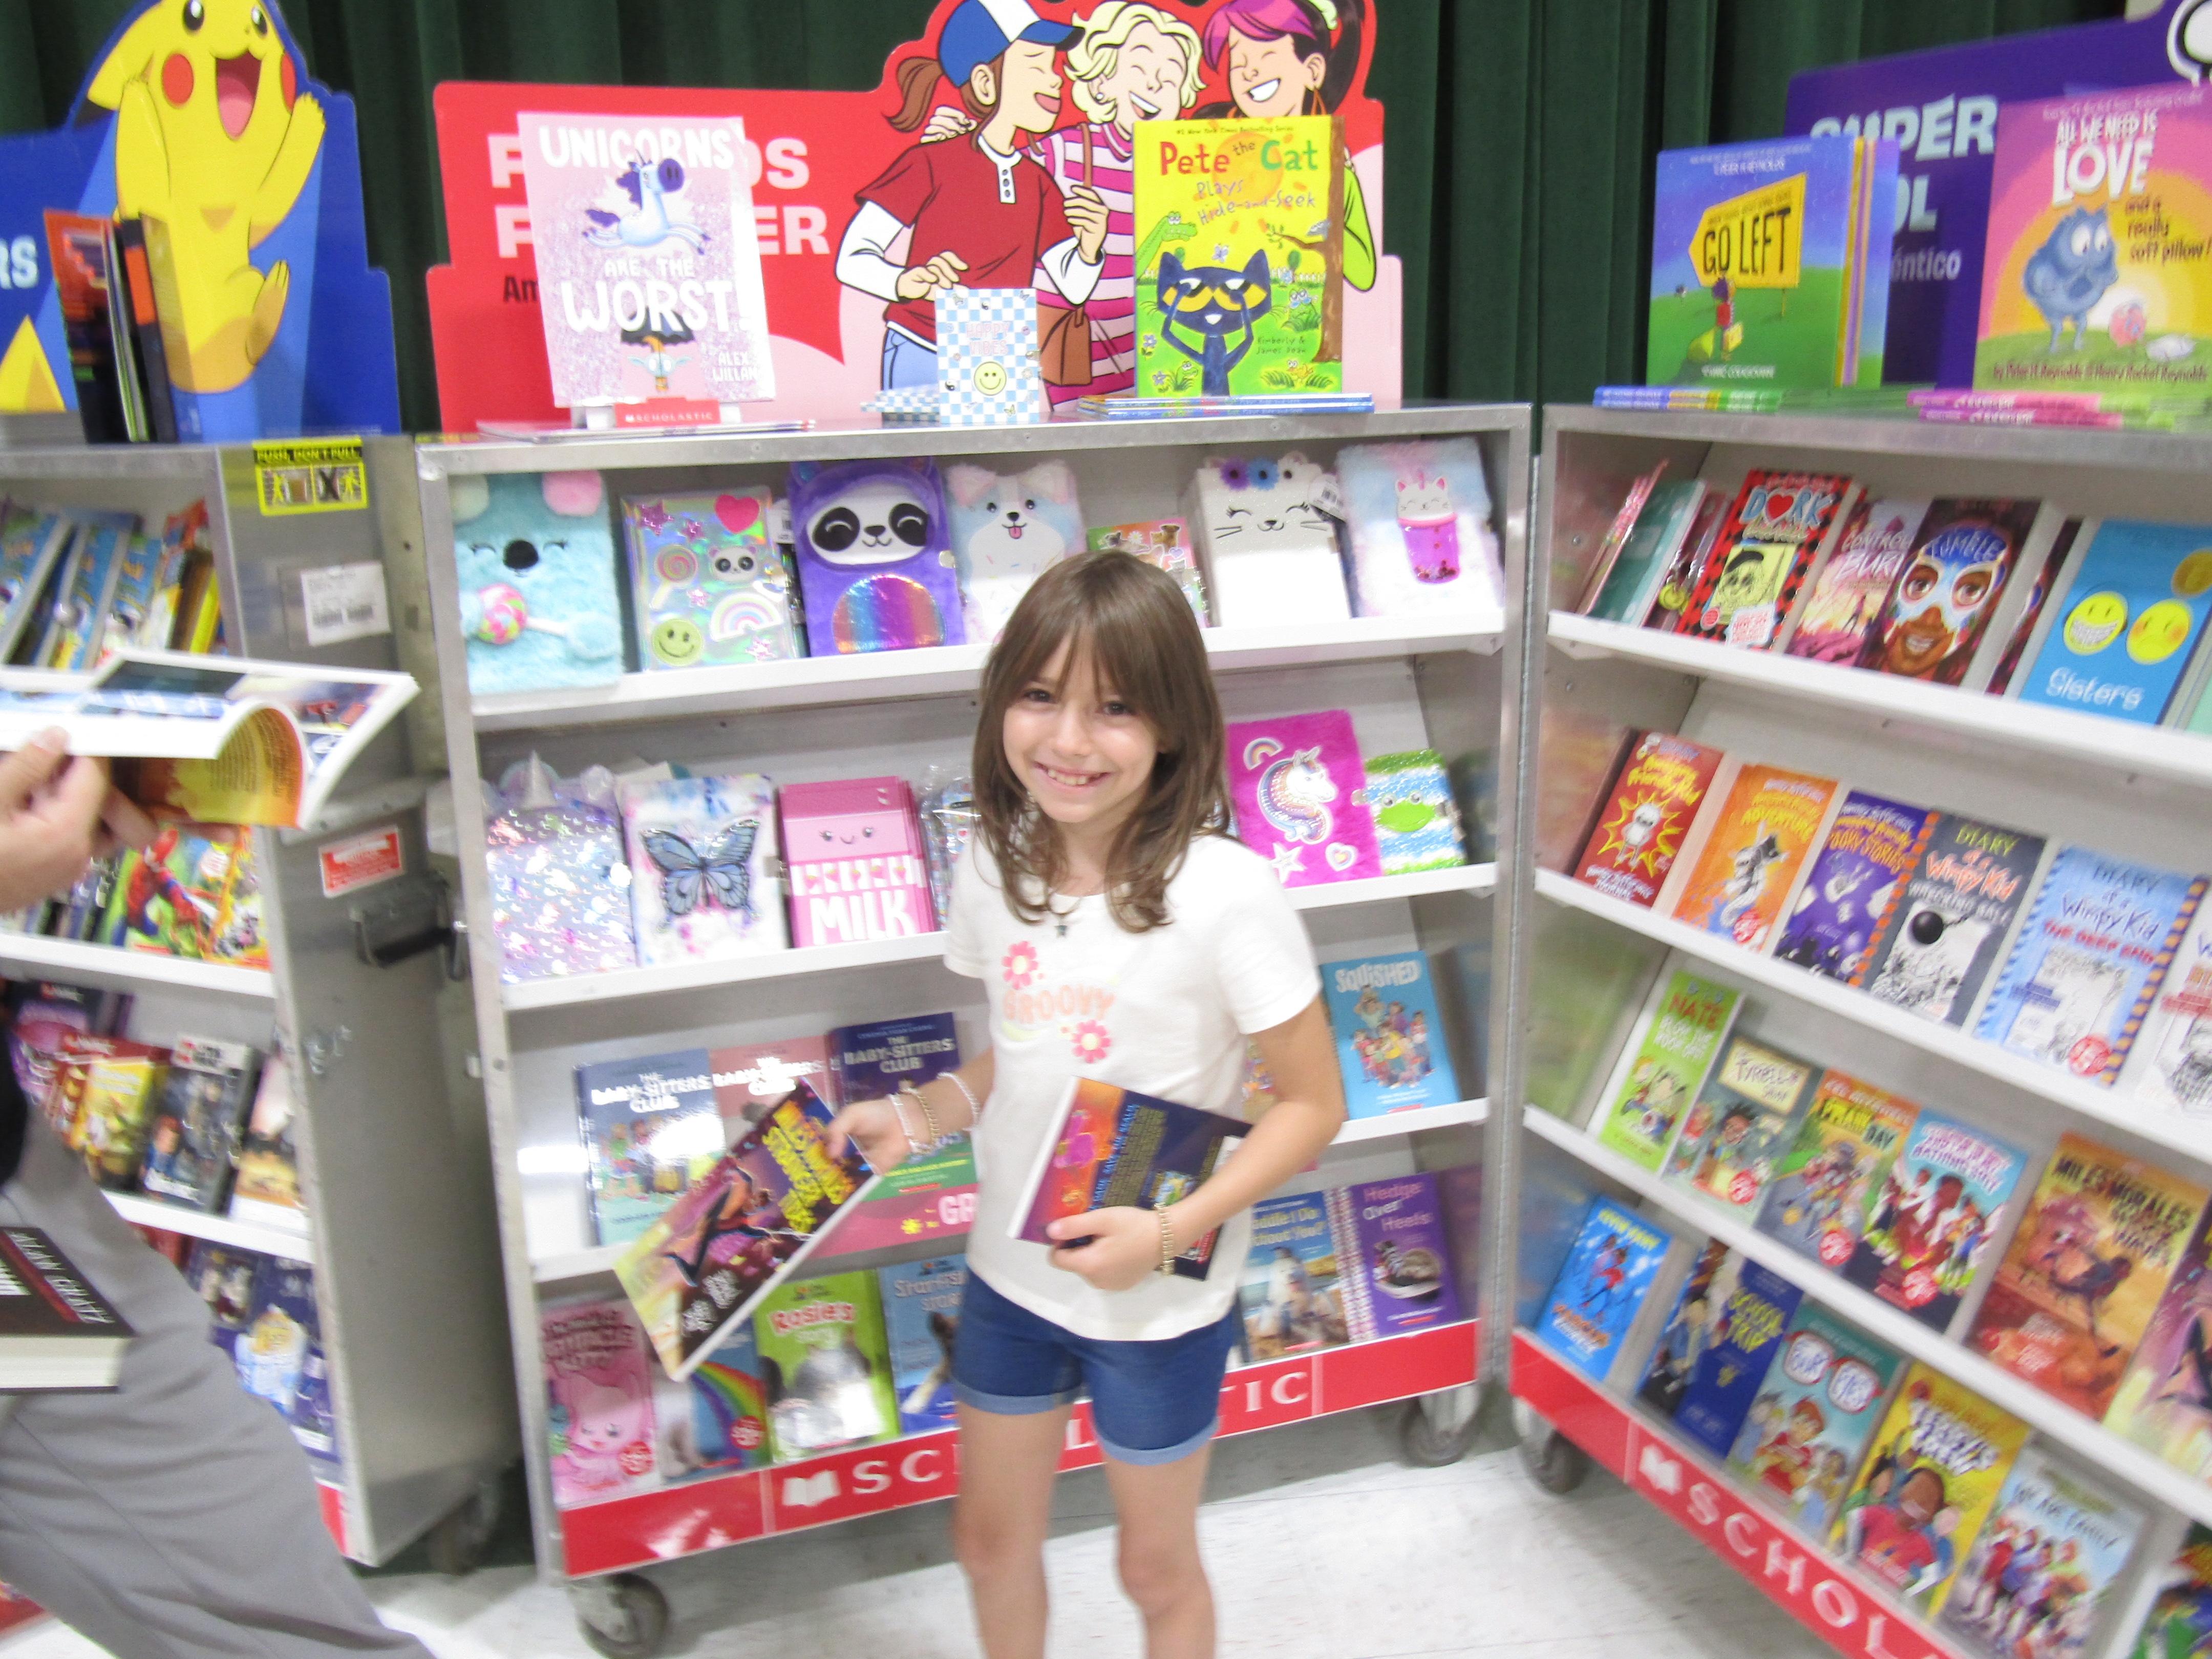 Harrison Park fourth-grader, Amira Duvall enjoyed browsing the book fair at Harrison Park’s open house